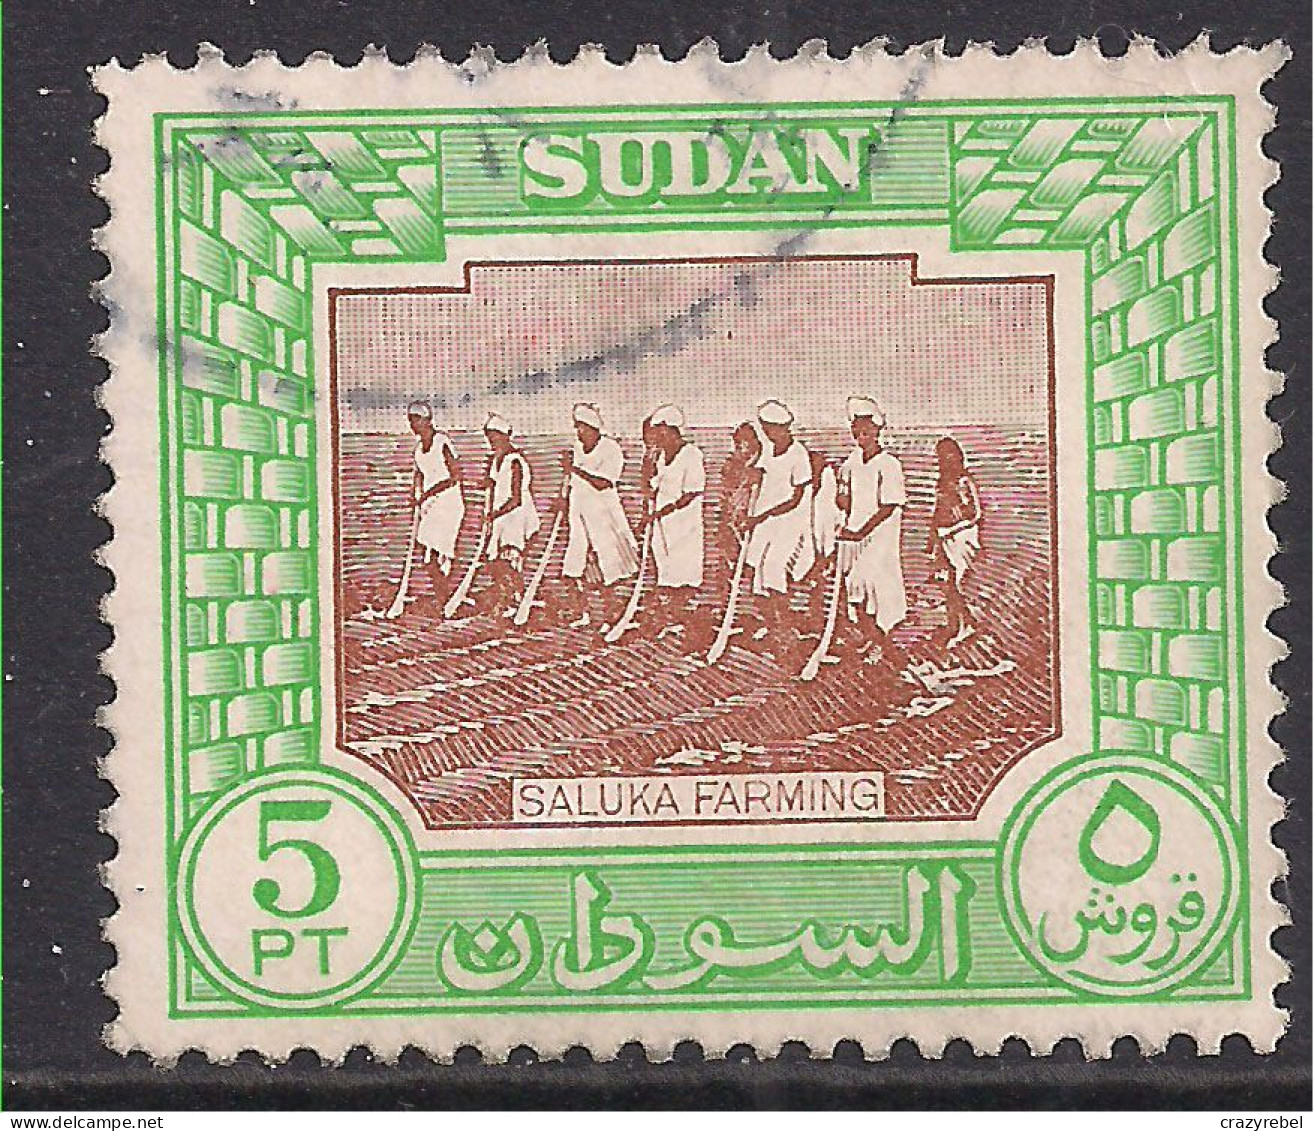 Sudan 1951 KGV1 5pt Saluka Farming Used SG 134 ( D328 ) - Soudan (...-1951)